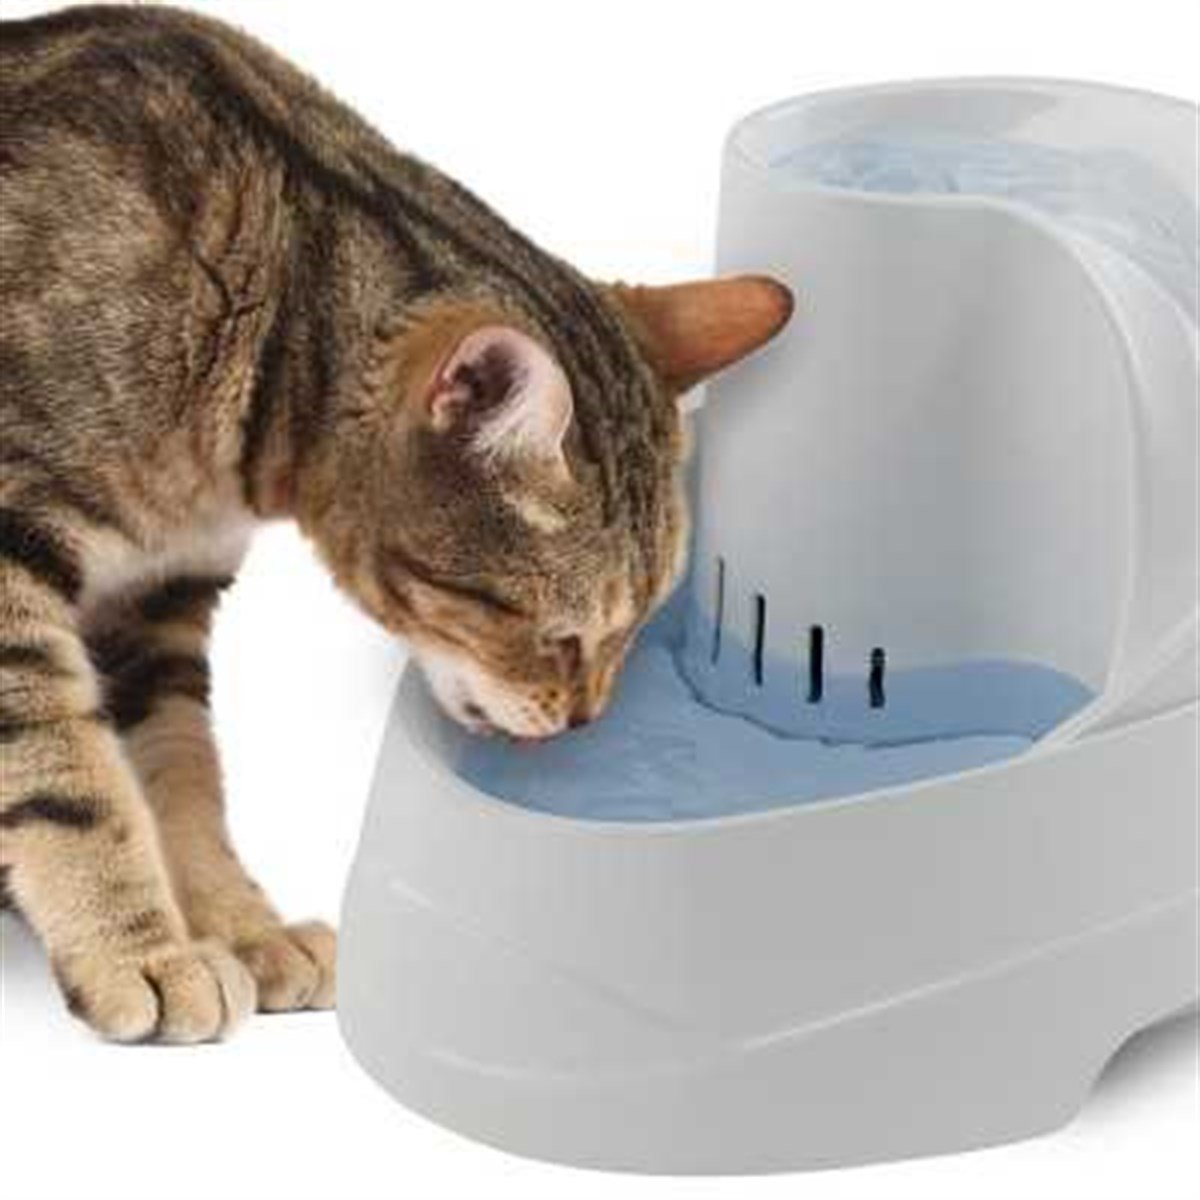 ferplast vega selale otomatik kedi su kabı